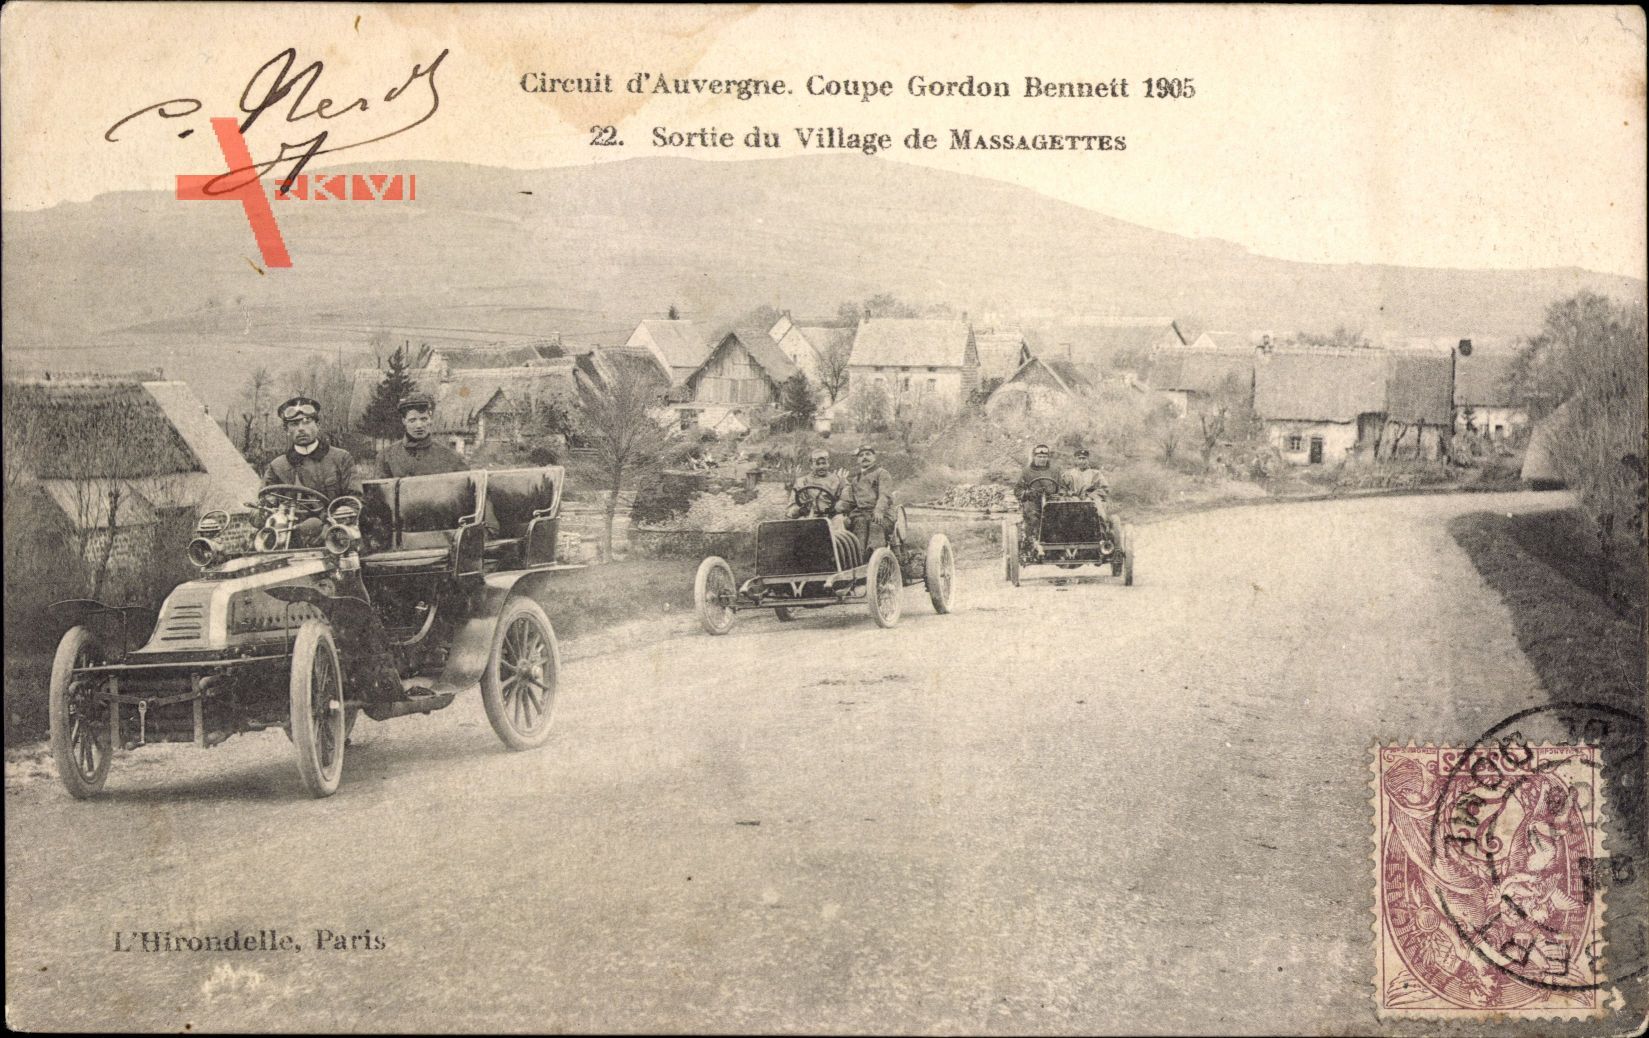 Circuit dAuvergne, Coupe Gordon Bennett 1905, Massagettes